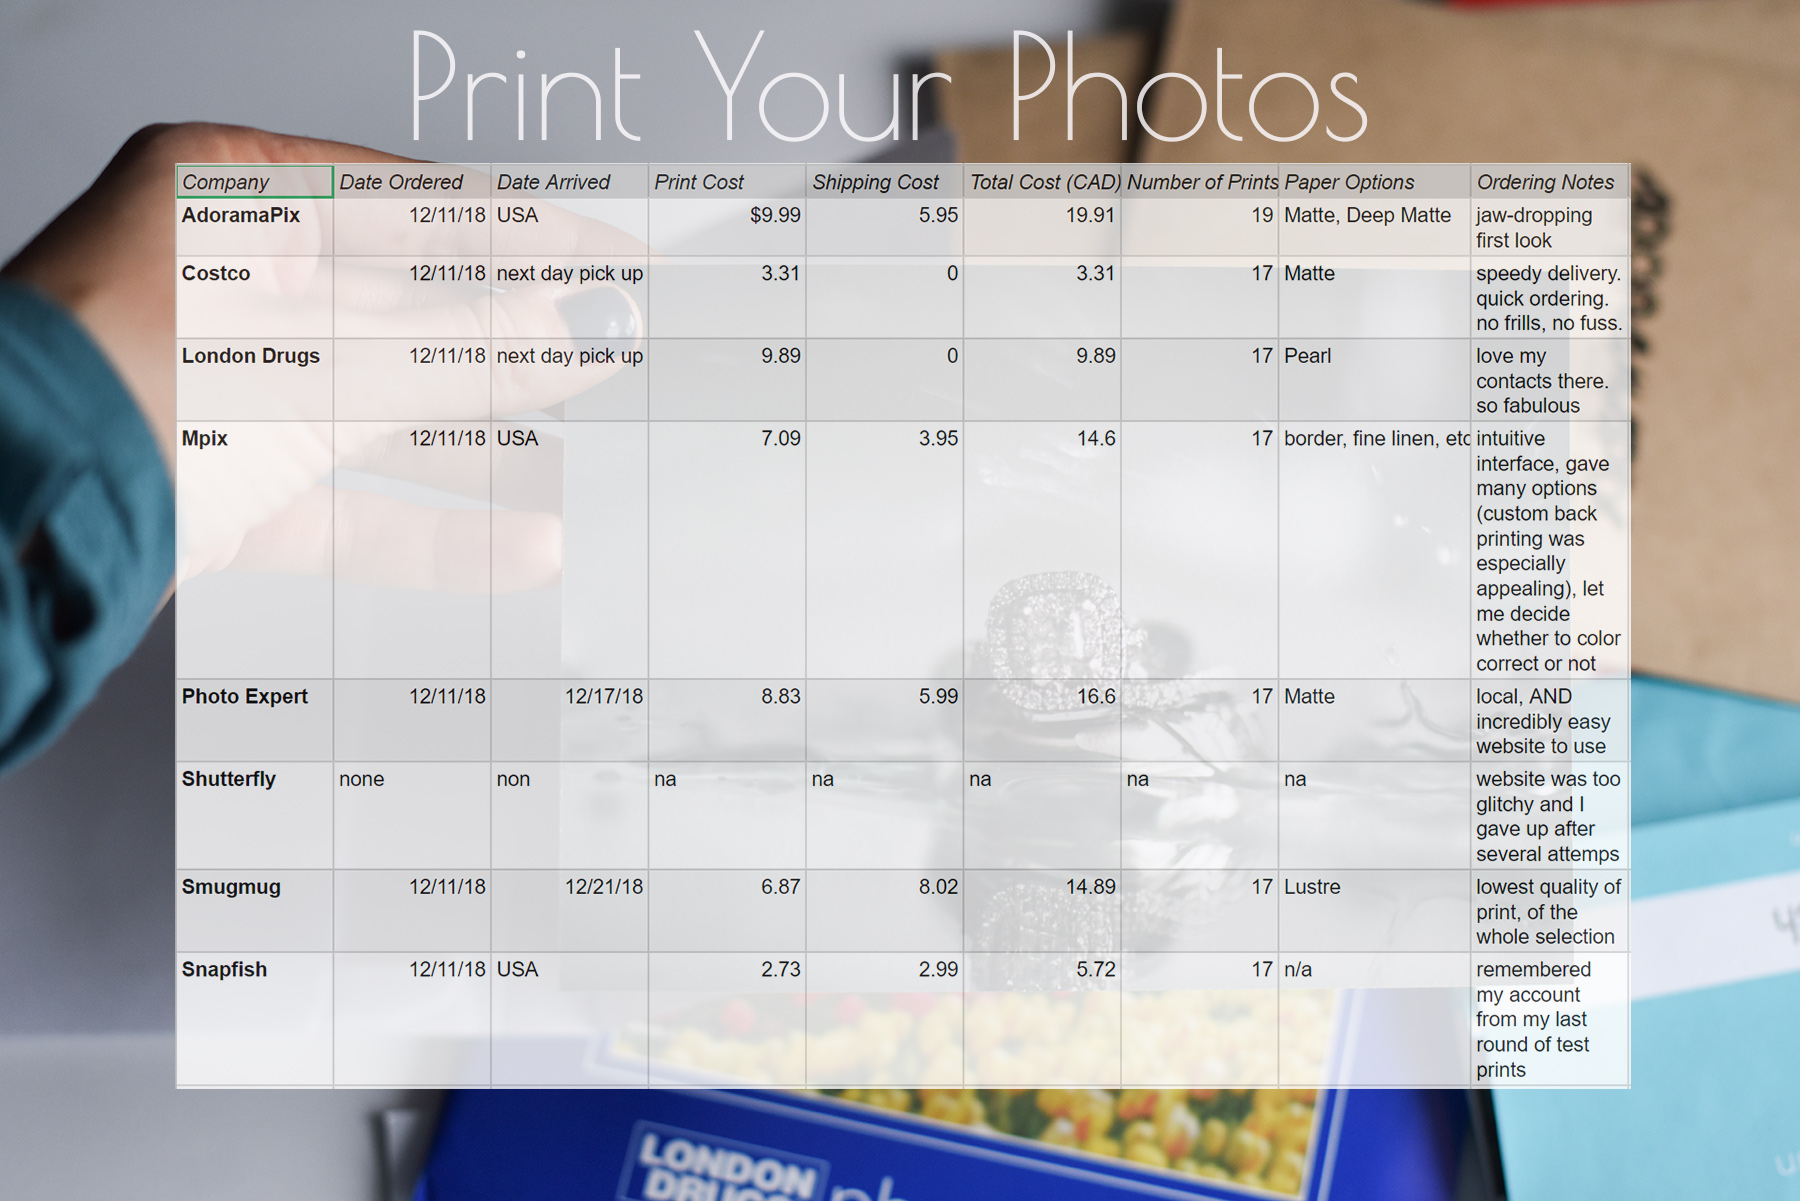 Where to print your photos